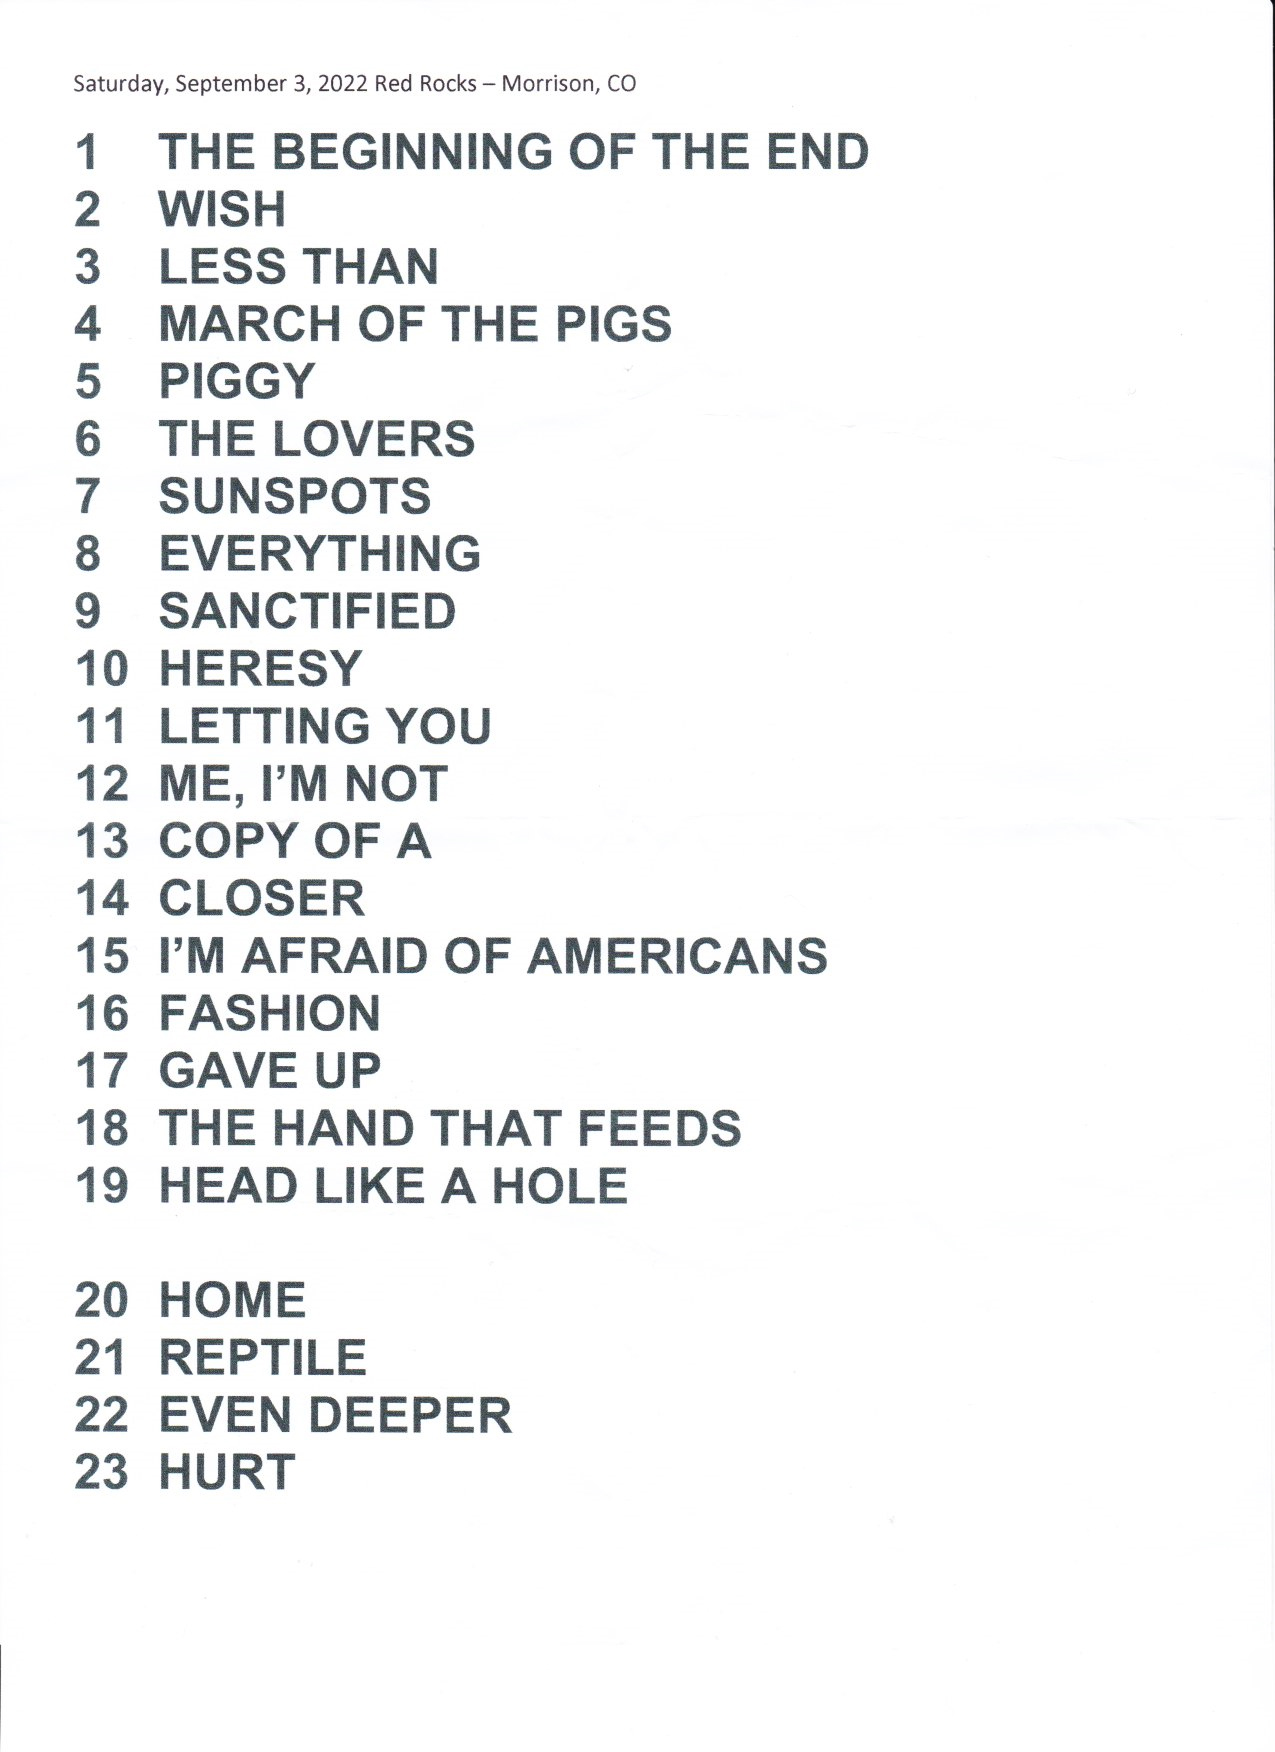 09/03/2022 Red Rocks Night 2 Setlist